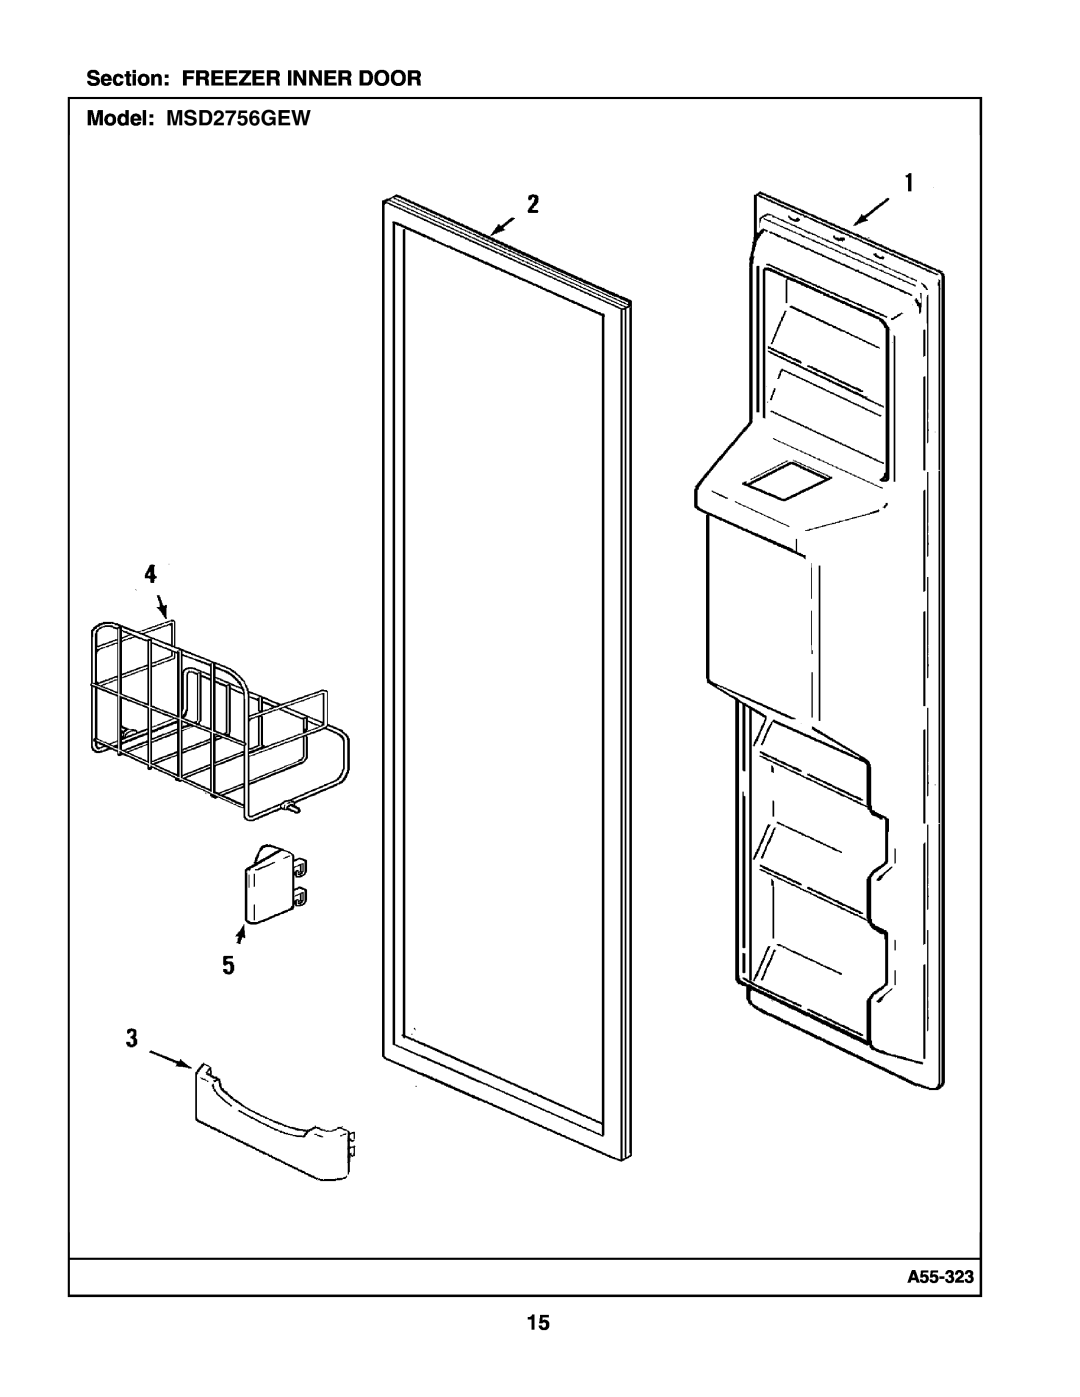 Maytag manual Section FREEZER INNER DOOR Model MSD2756GEW, A55-323 